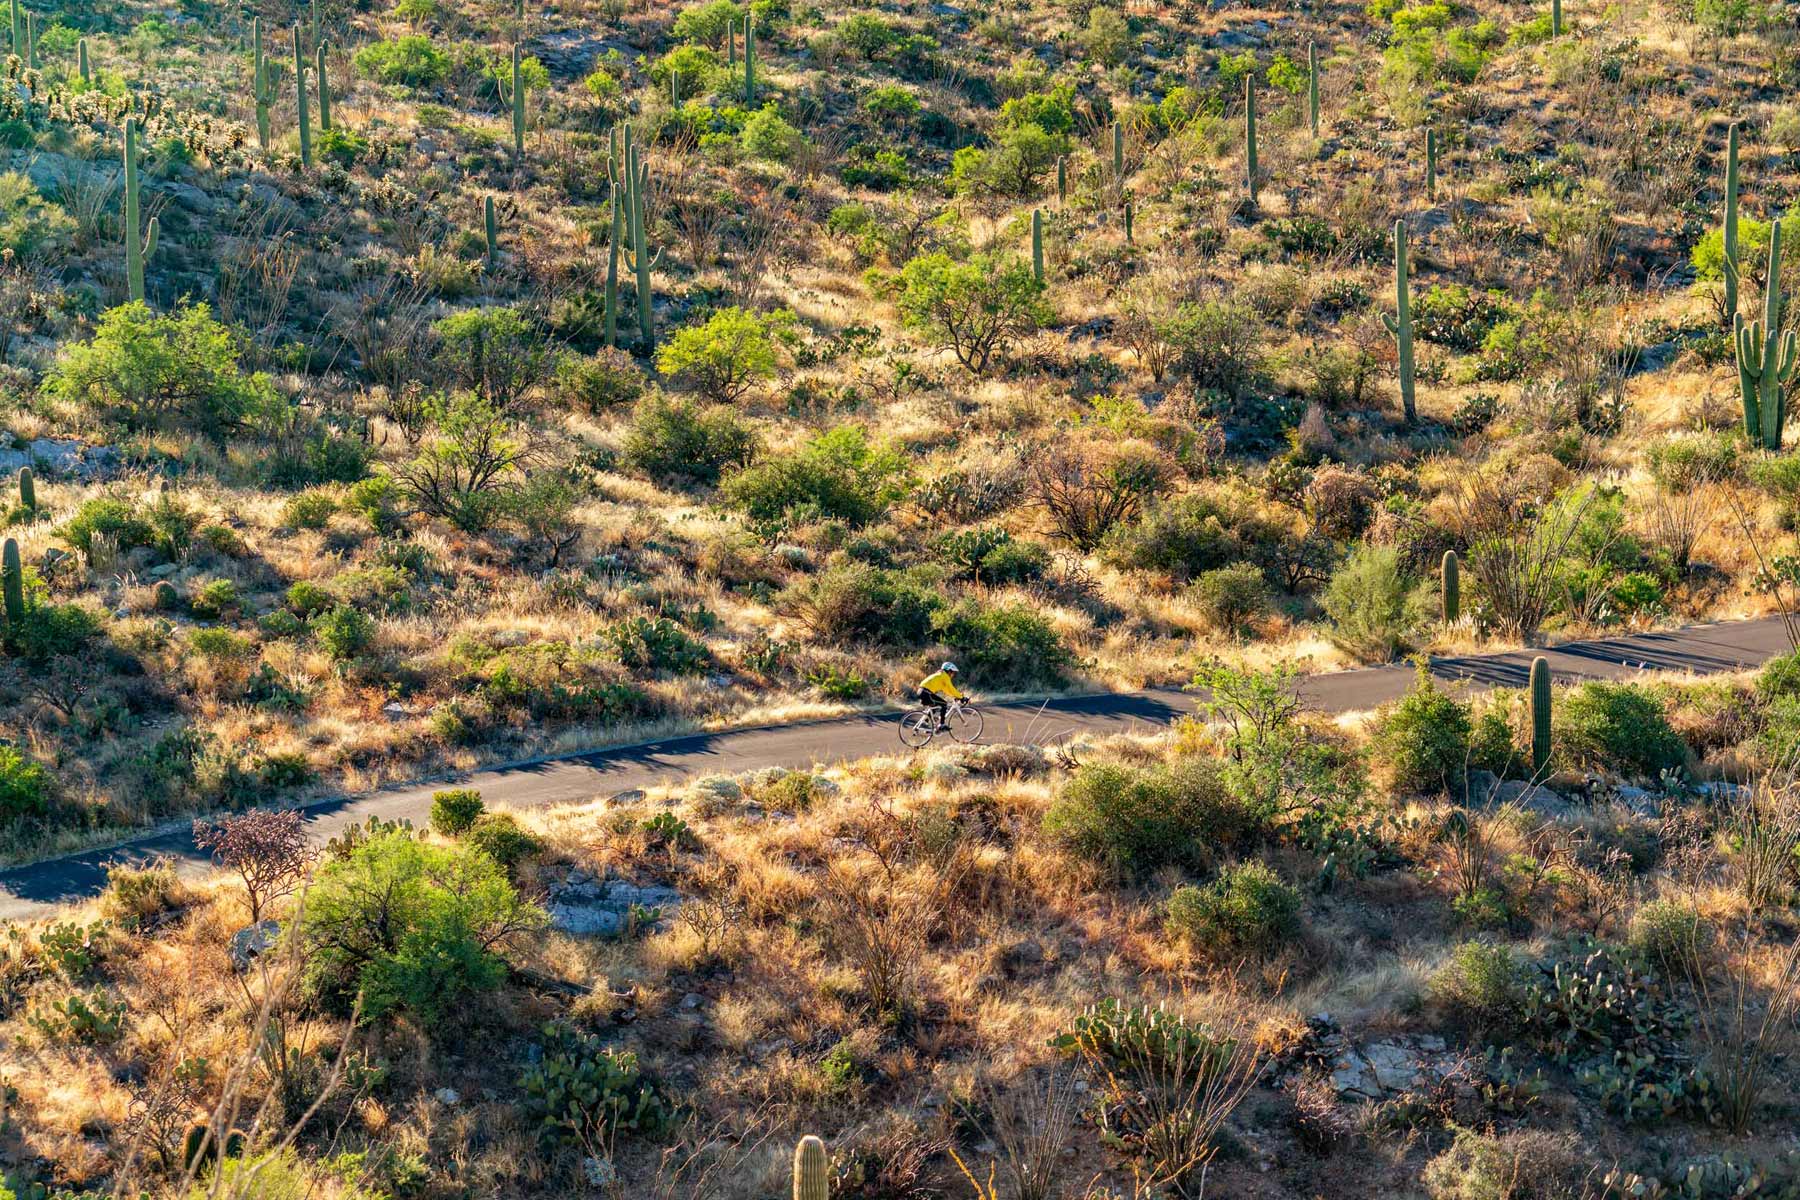 cactus forest drive, saguaro national park tucson arizona